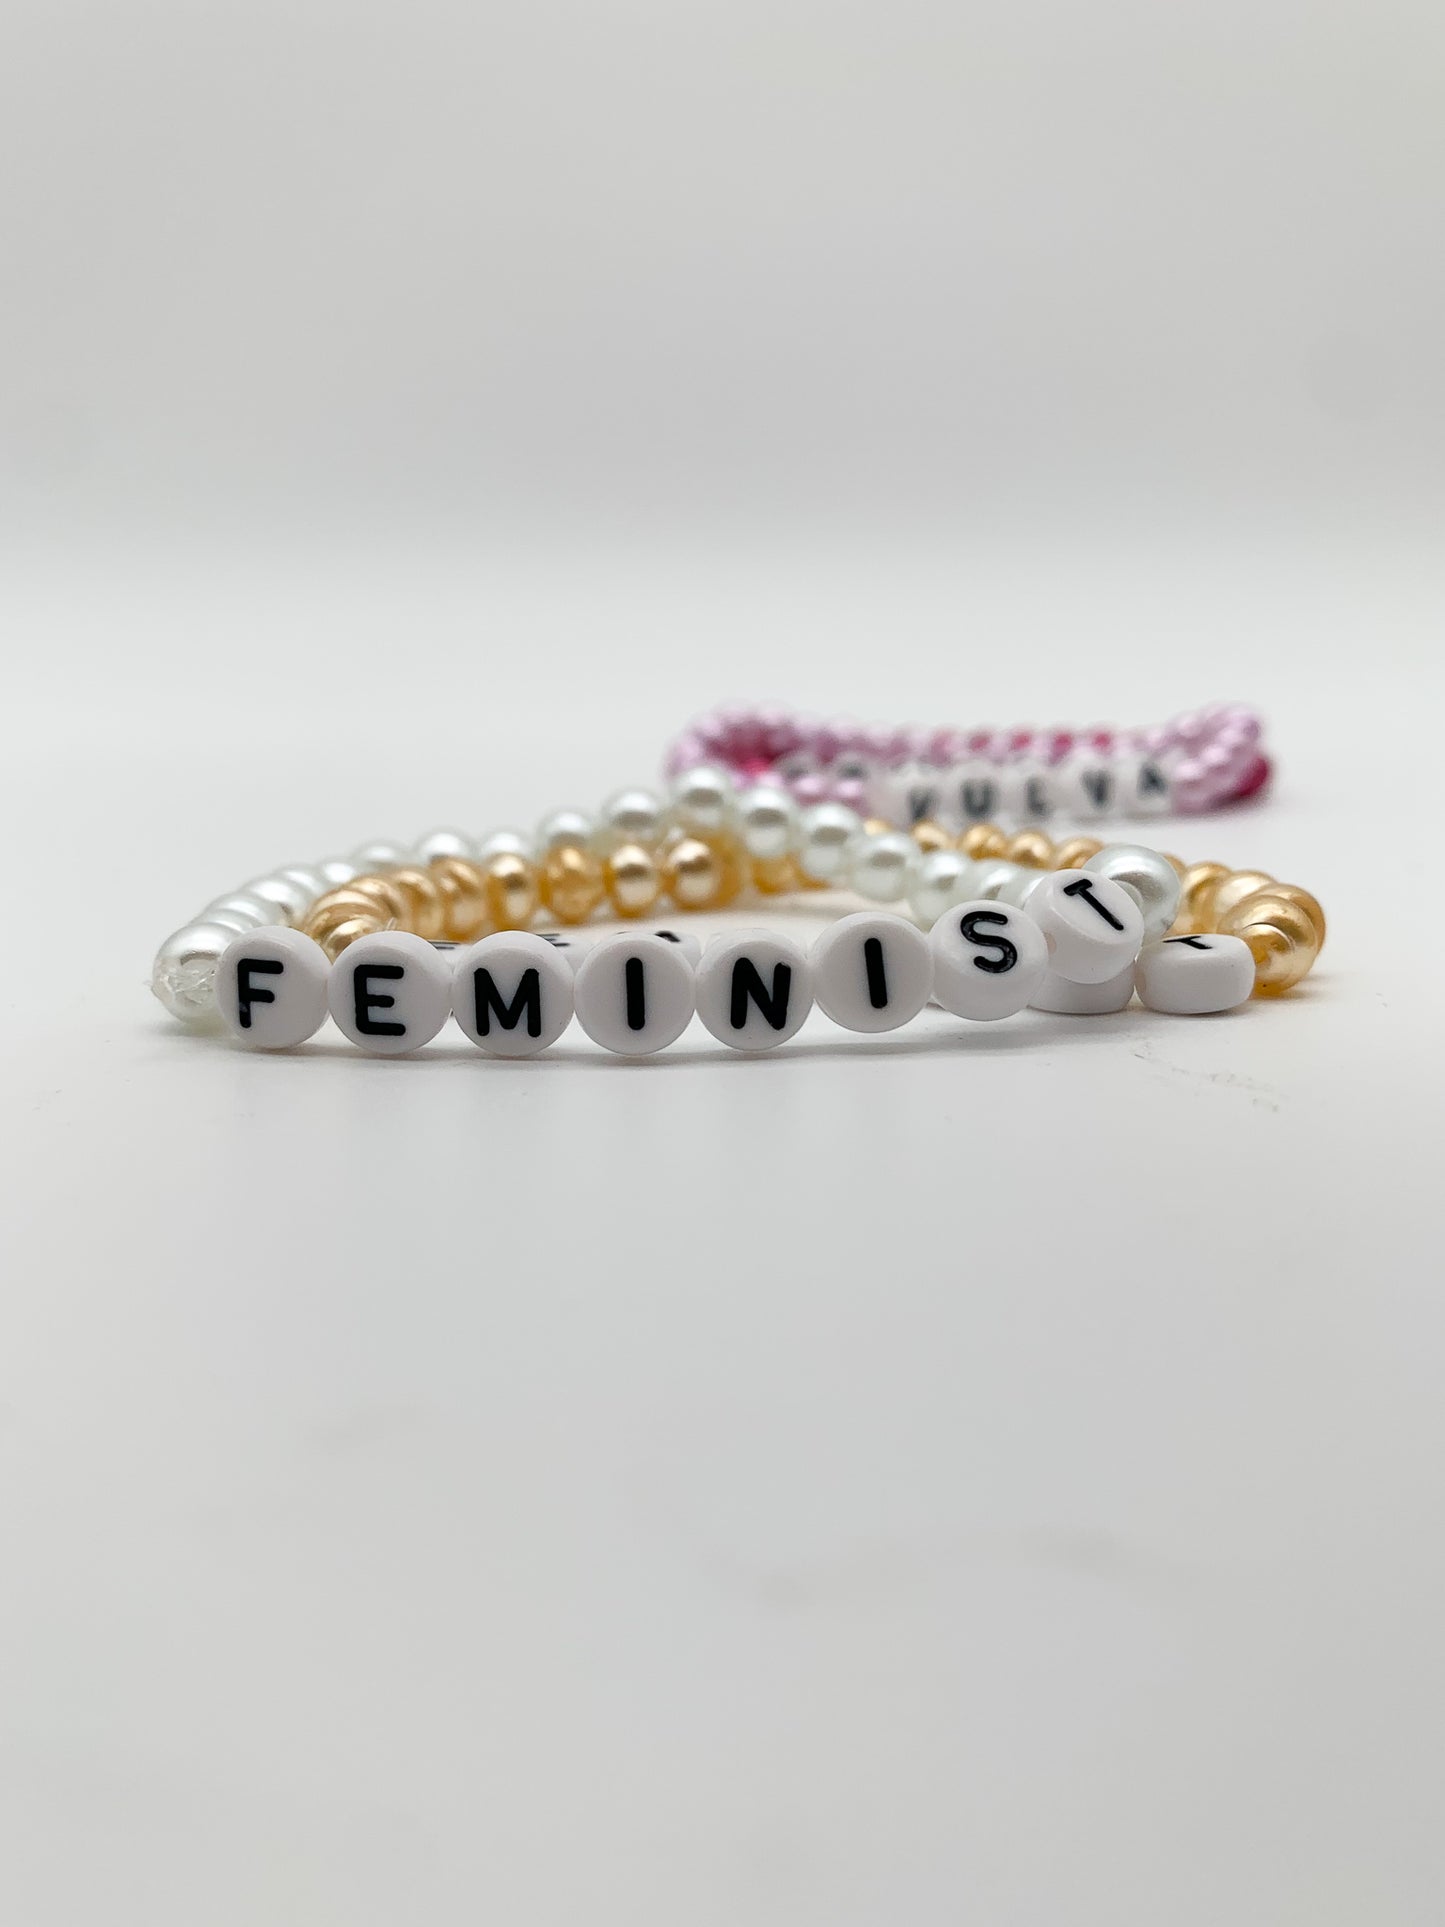 Feminist | Armband